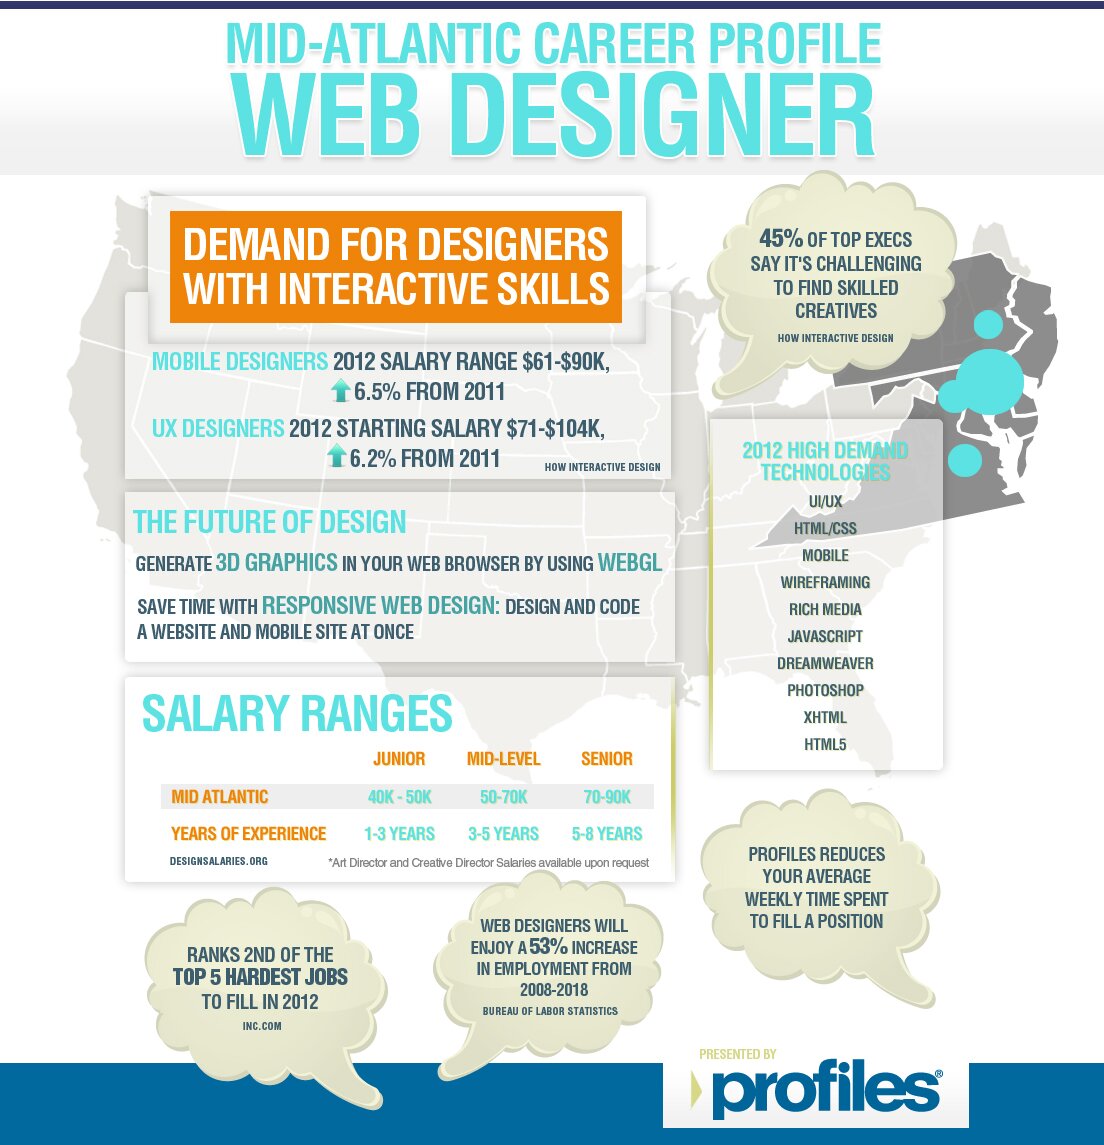 The bigger version of Web Designer Career Profile